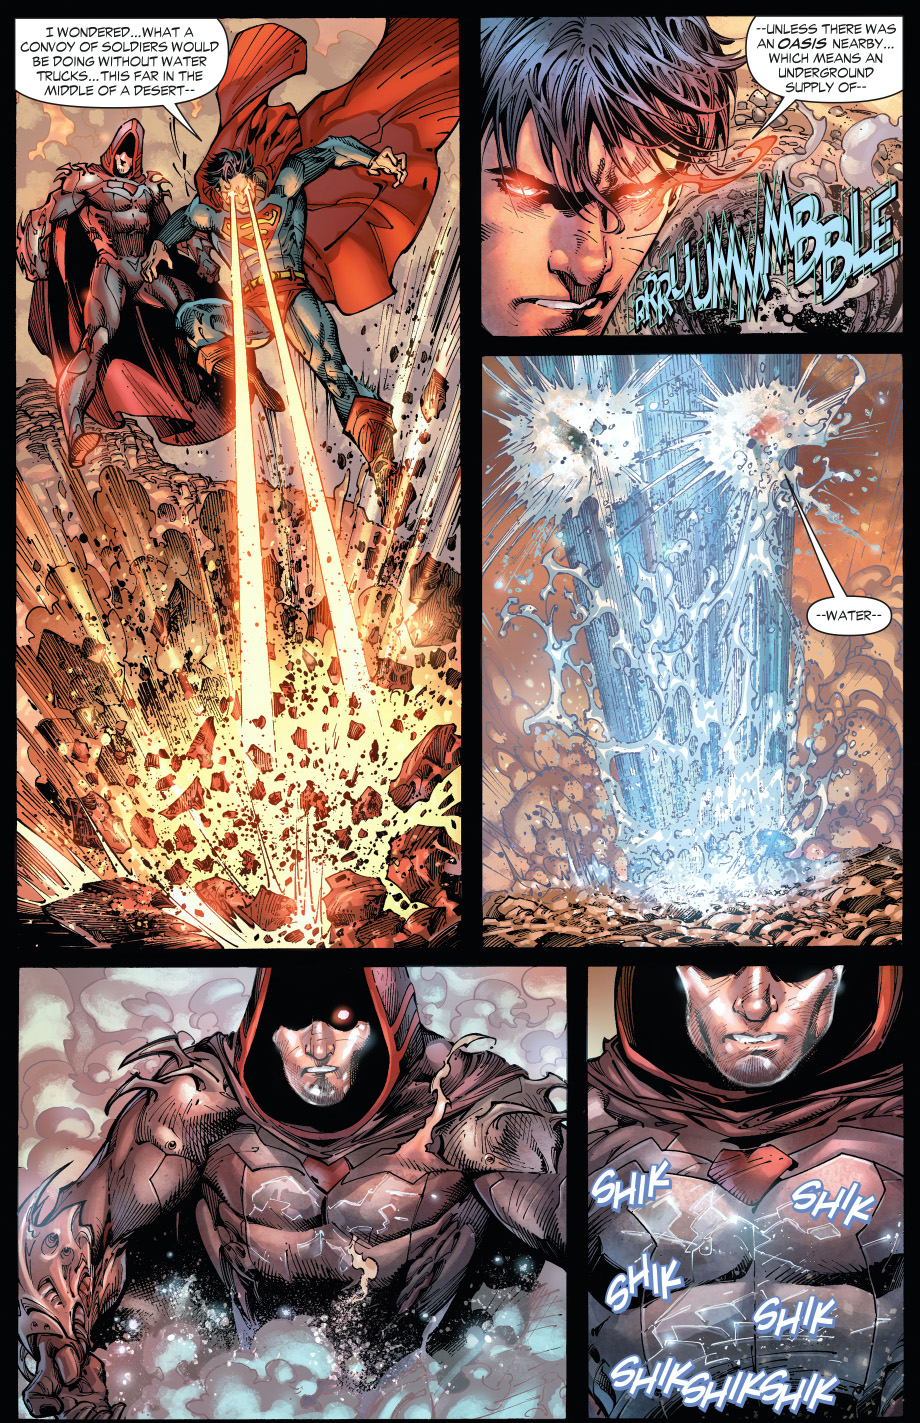 zod ambushes superman with kryptonite